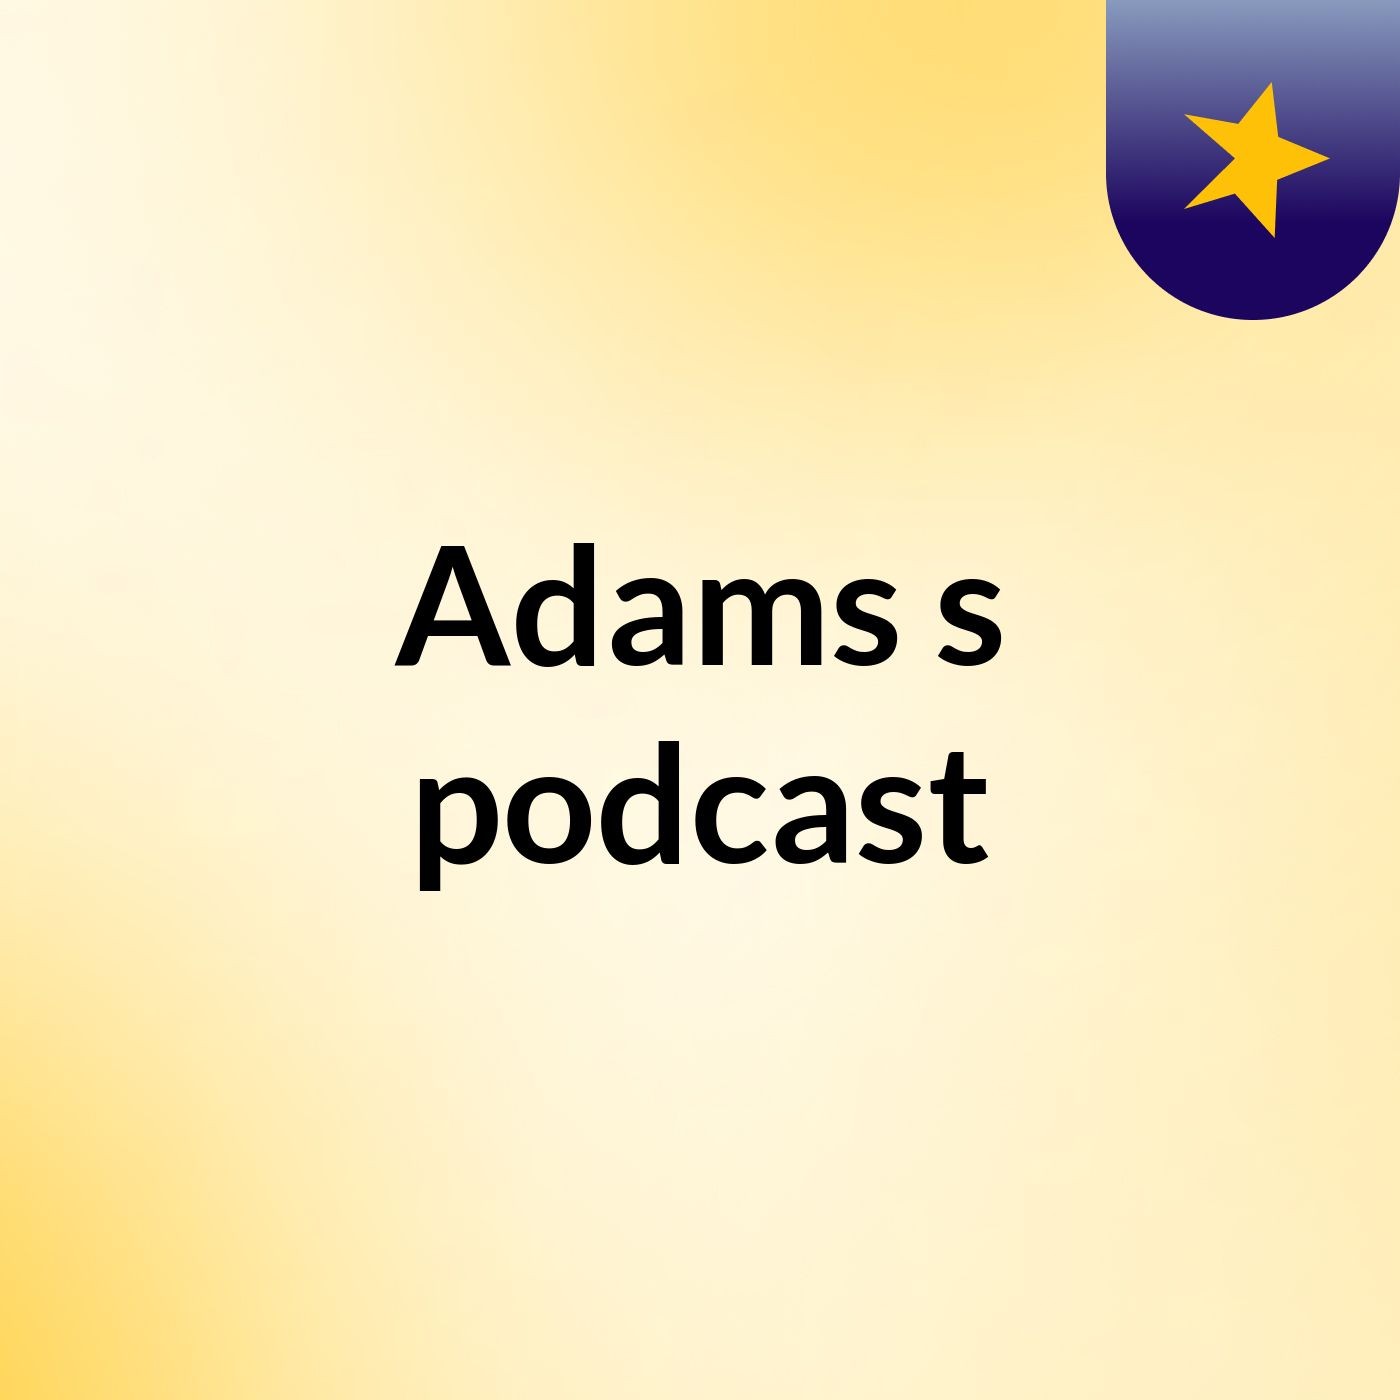 Adams's podcast